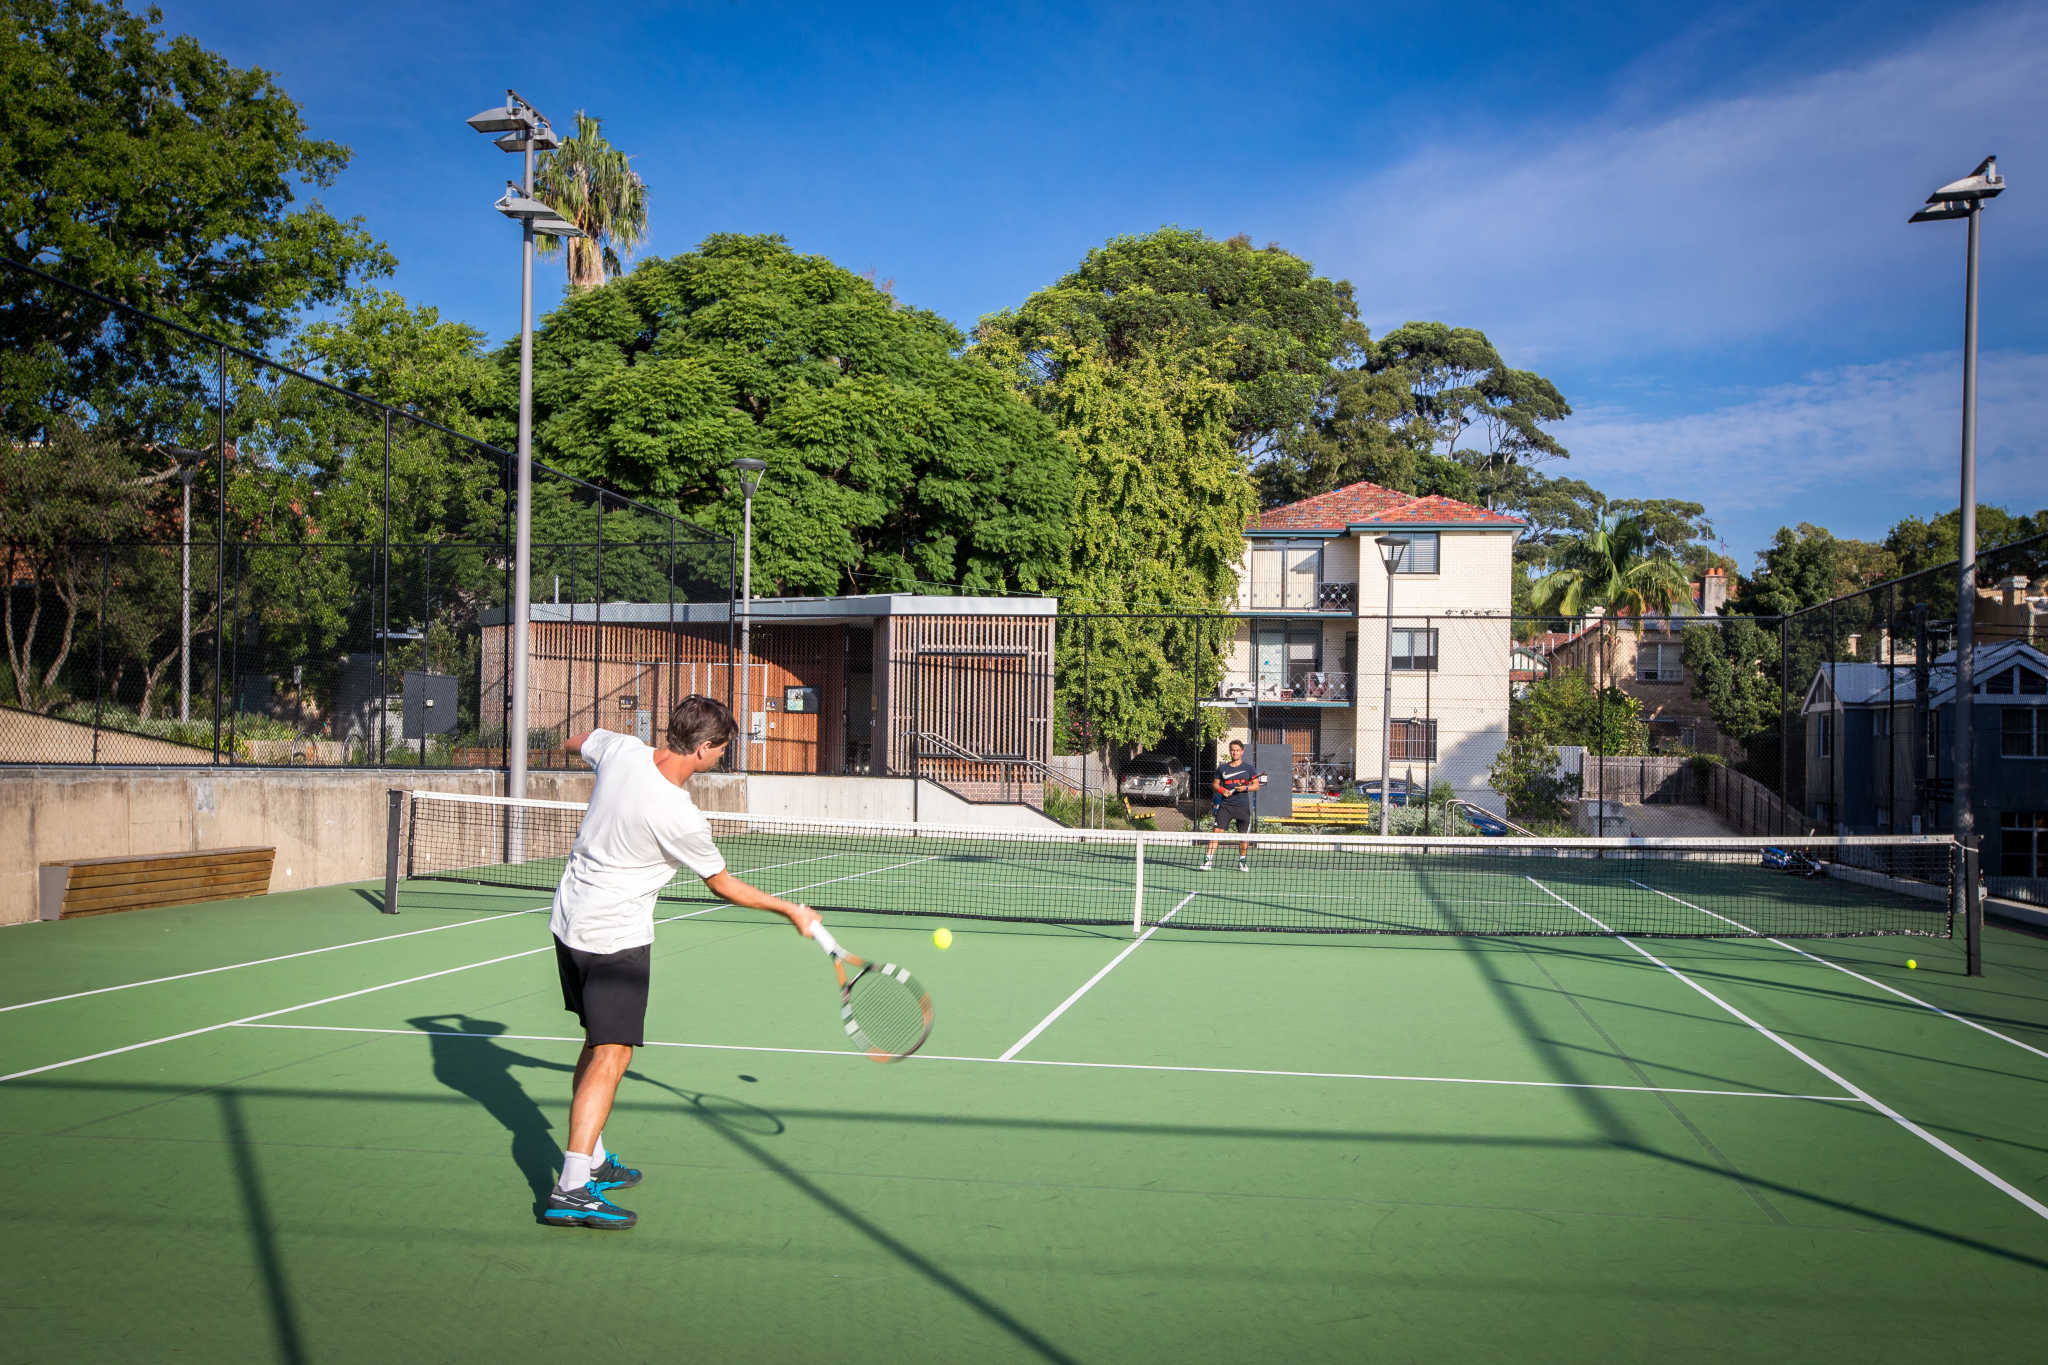 Blauwe plek naam Brochure Book a tennis court - City of Sydney